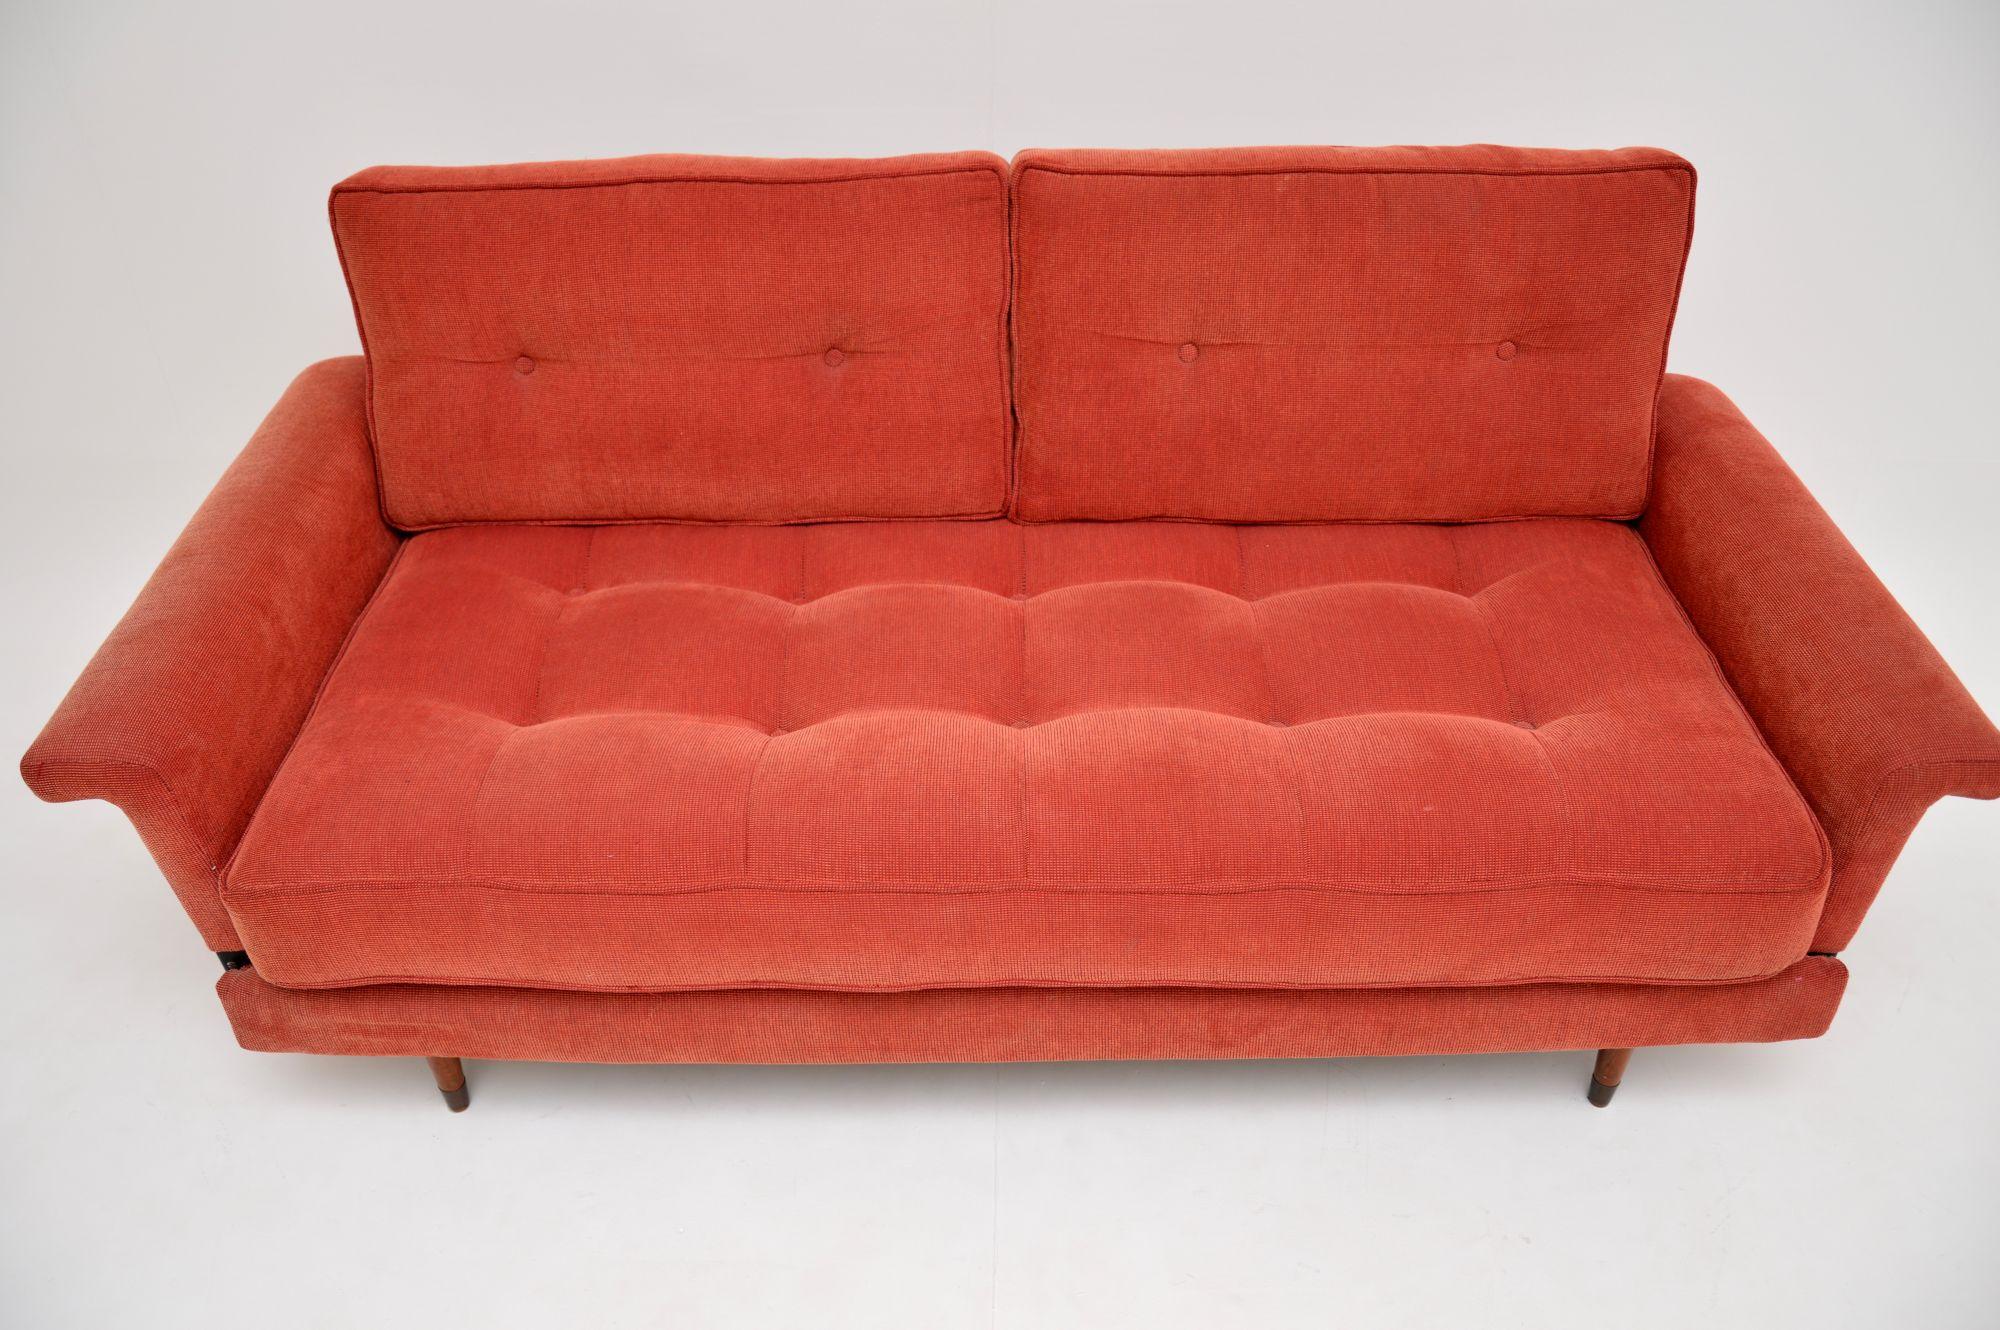 20th Century 1950s Vintage Sofa Bed